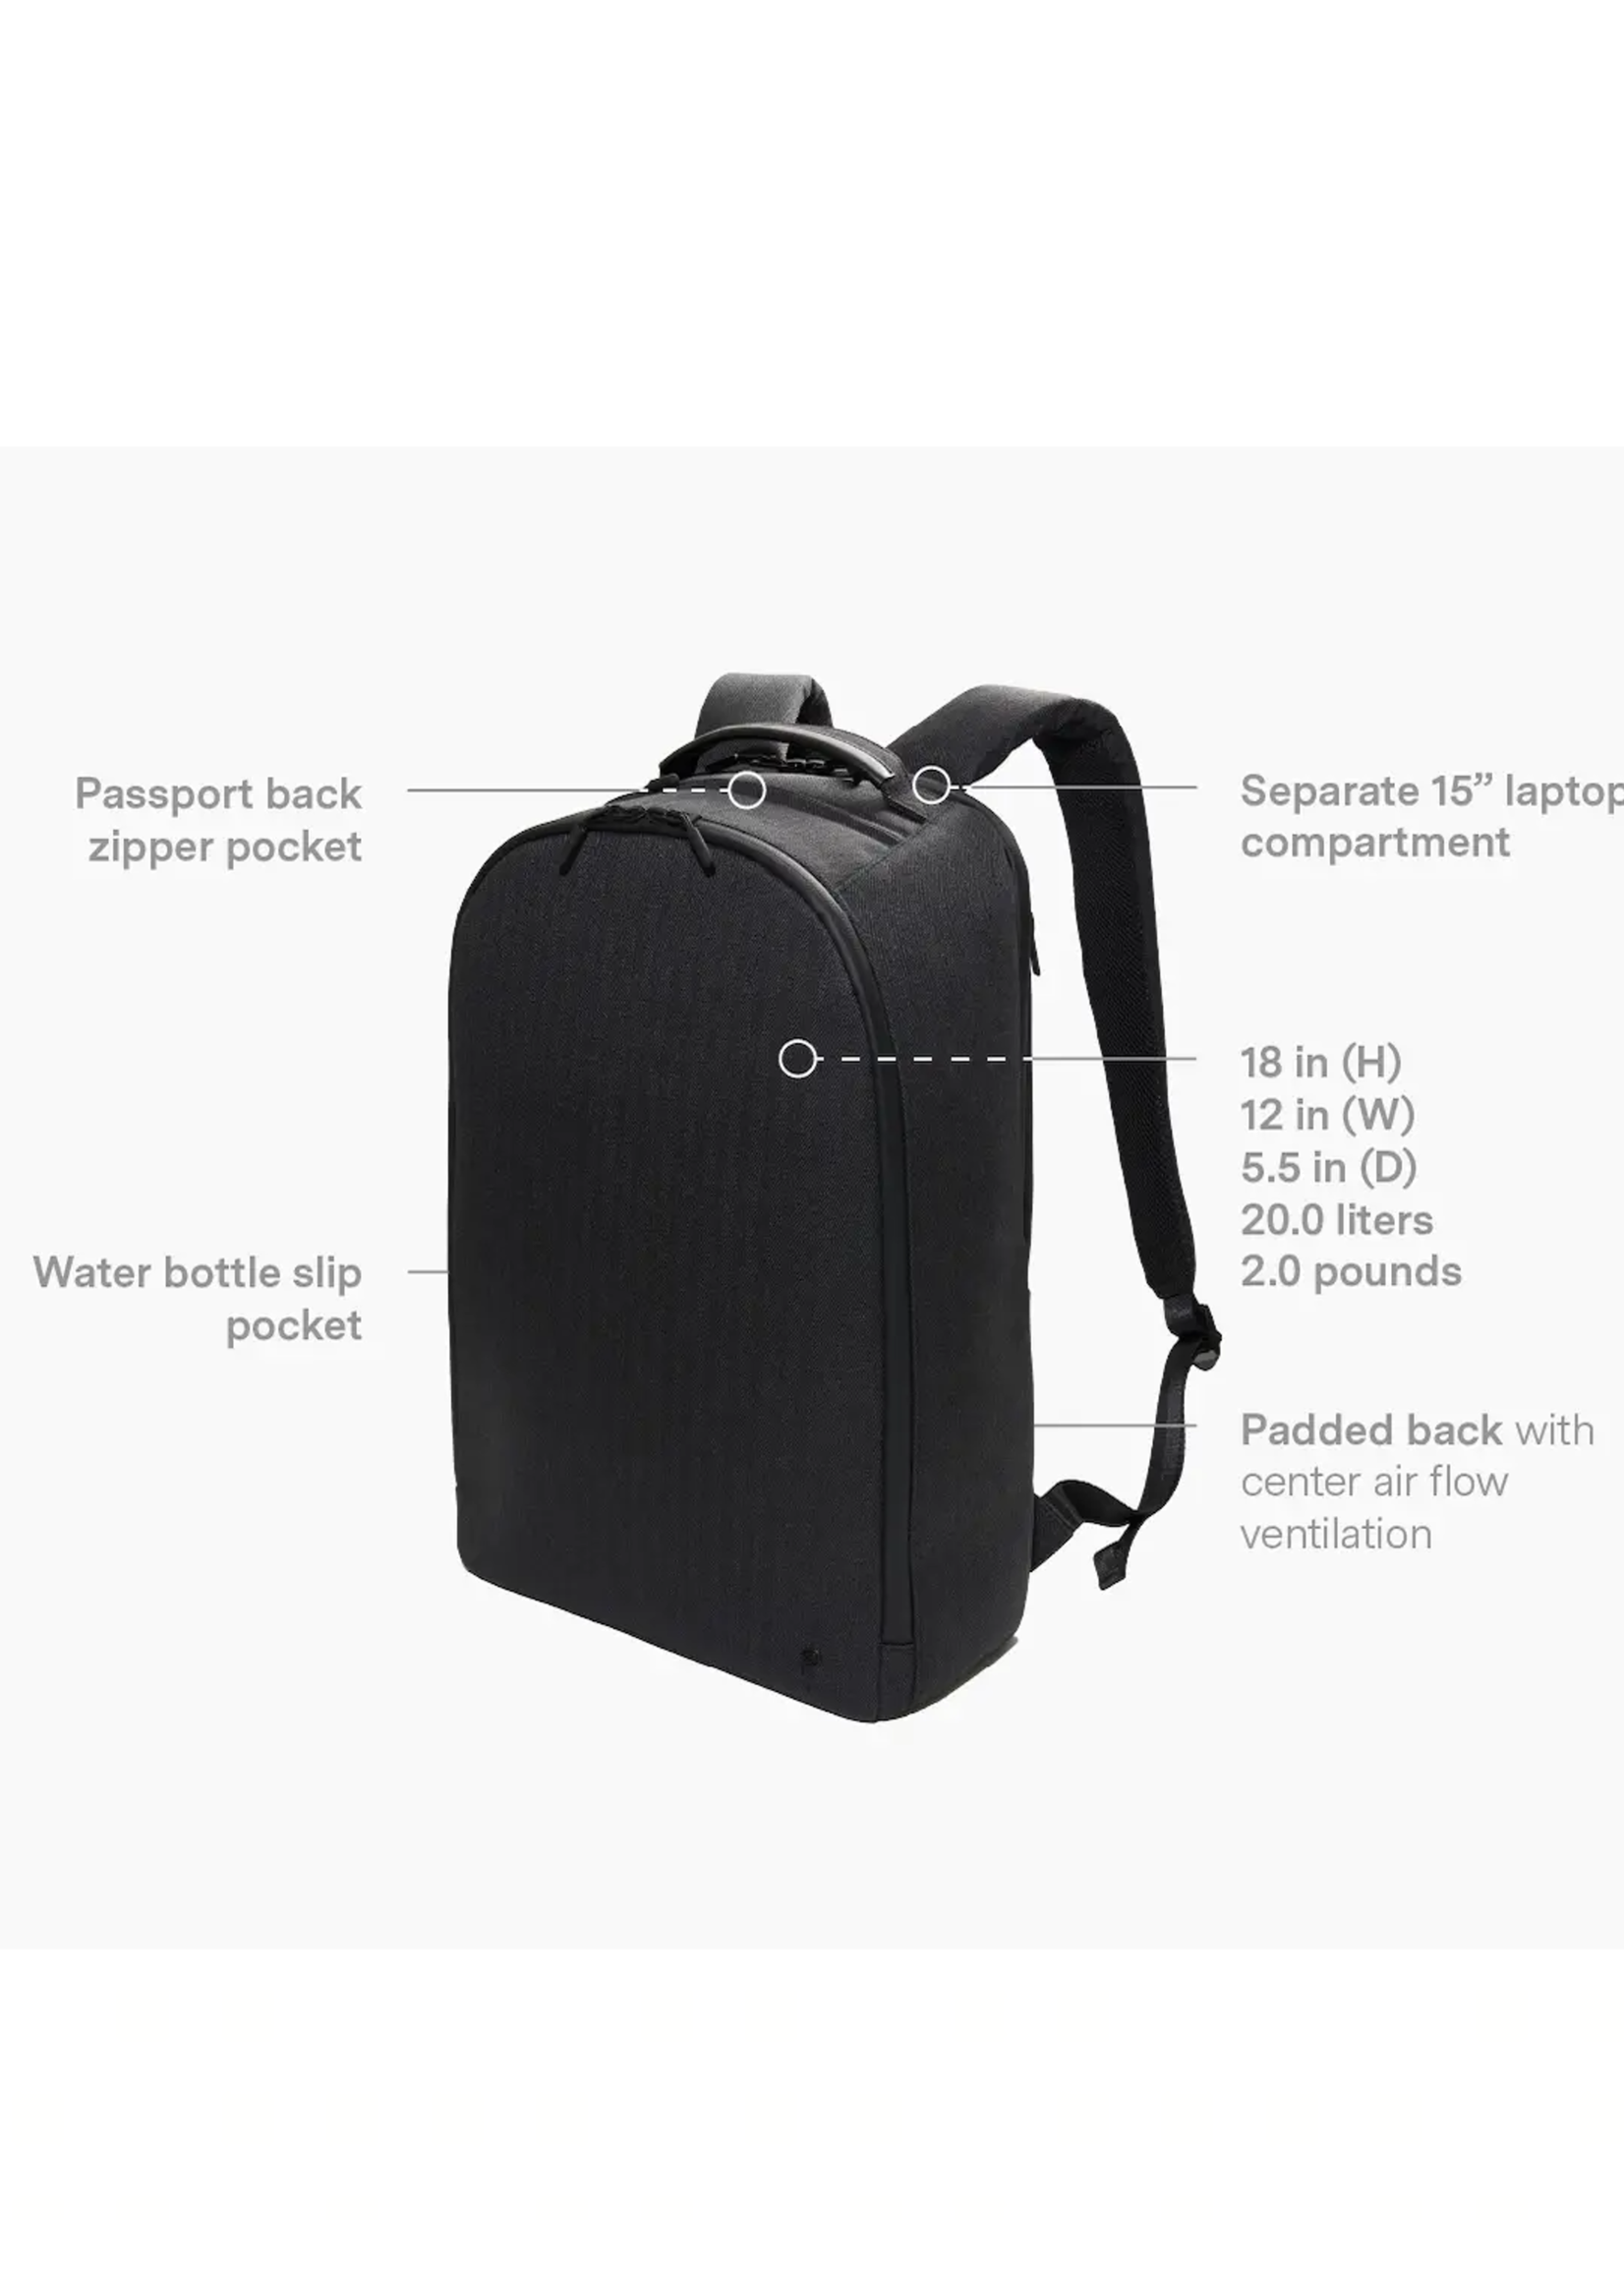 PUBLIC REC Pro Pack Backpack w/ Laptop Compartment